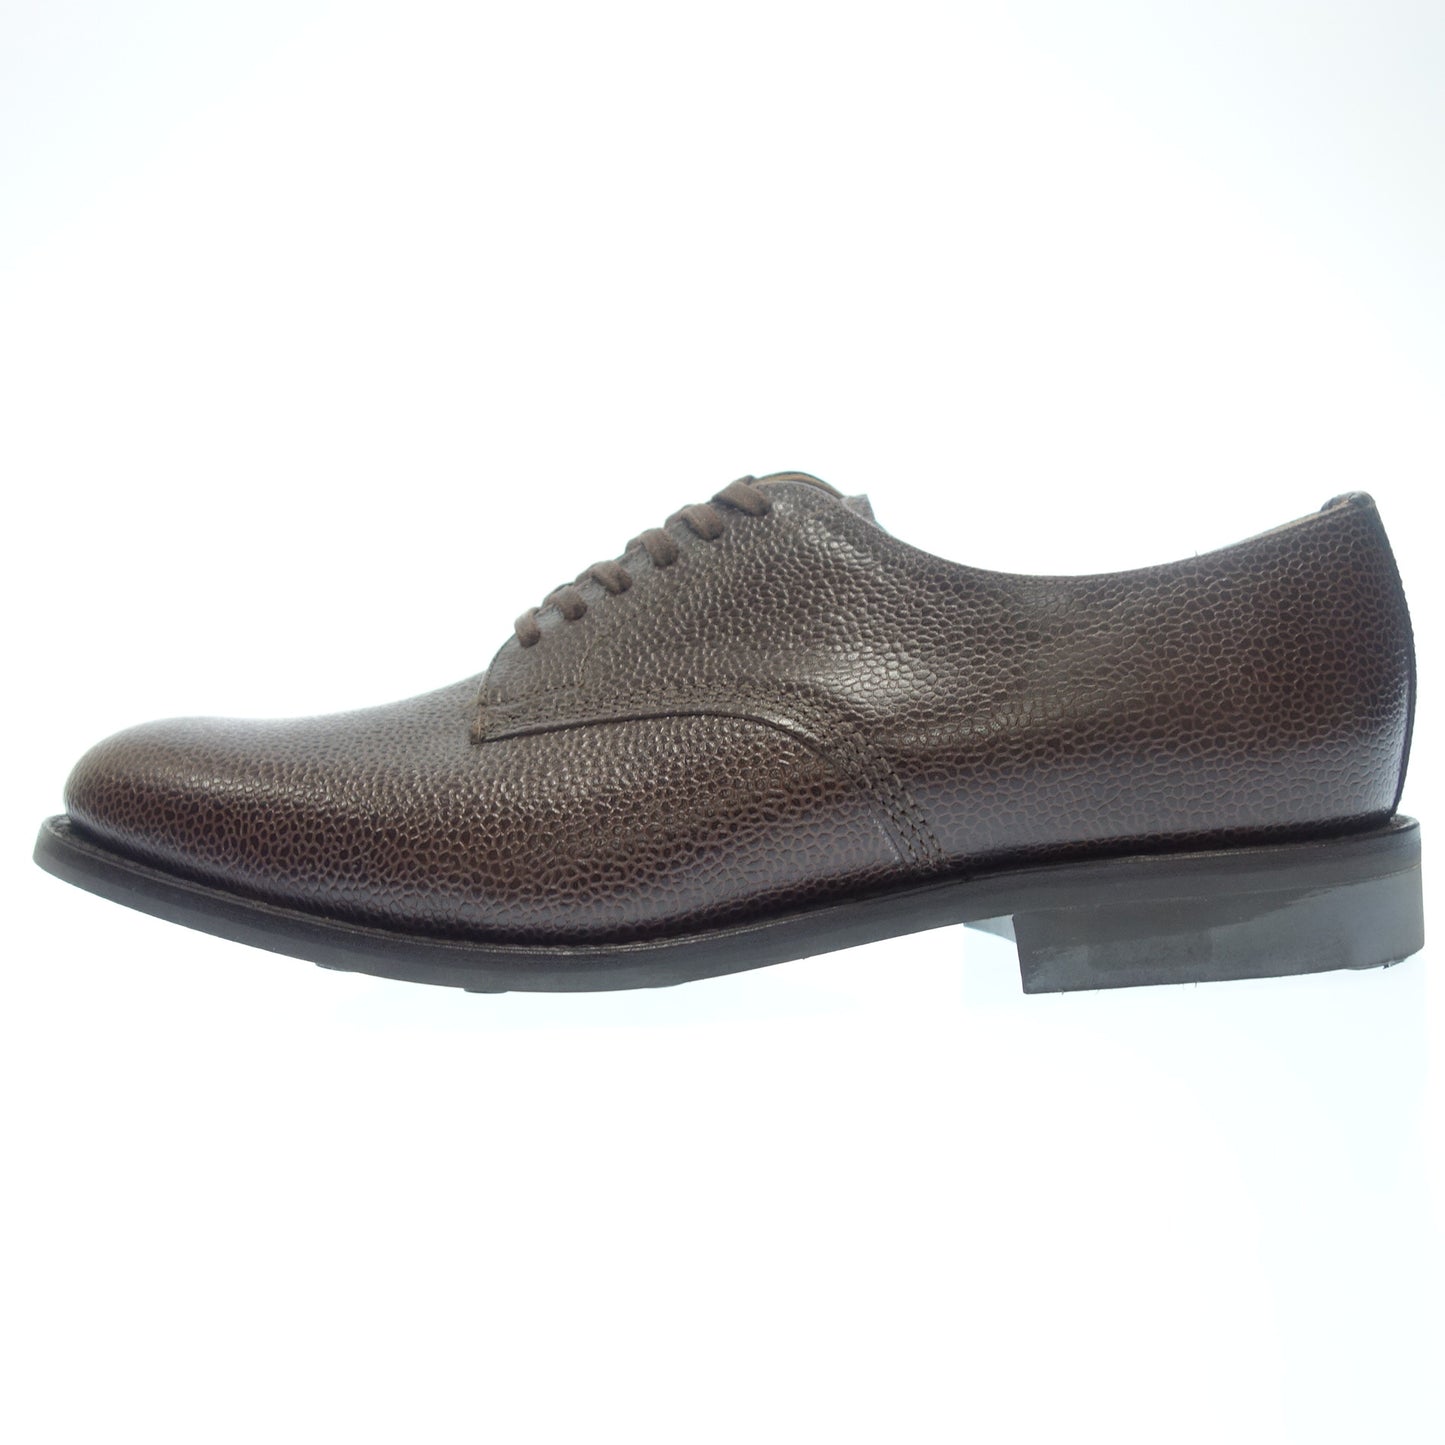 Unused ◆Sanders leather shoes plain toe 1806WG grain leather men's UK8.5 brown with box SANDERS [AFC10] 